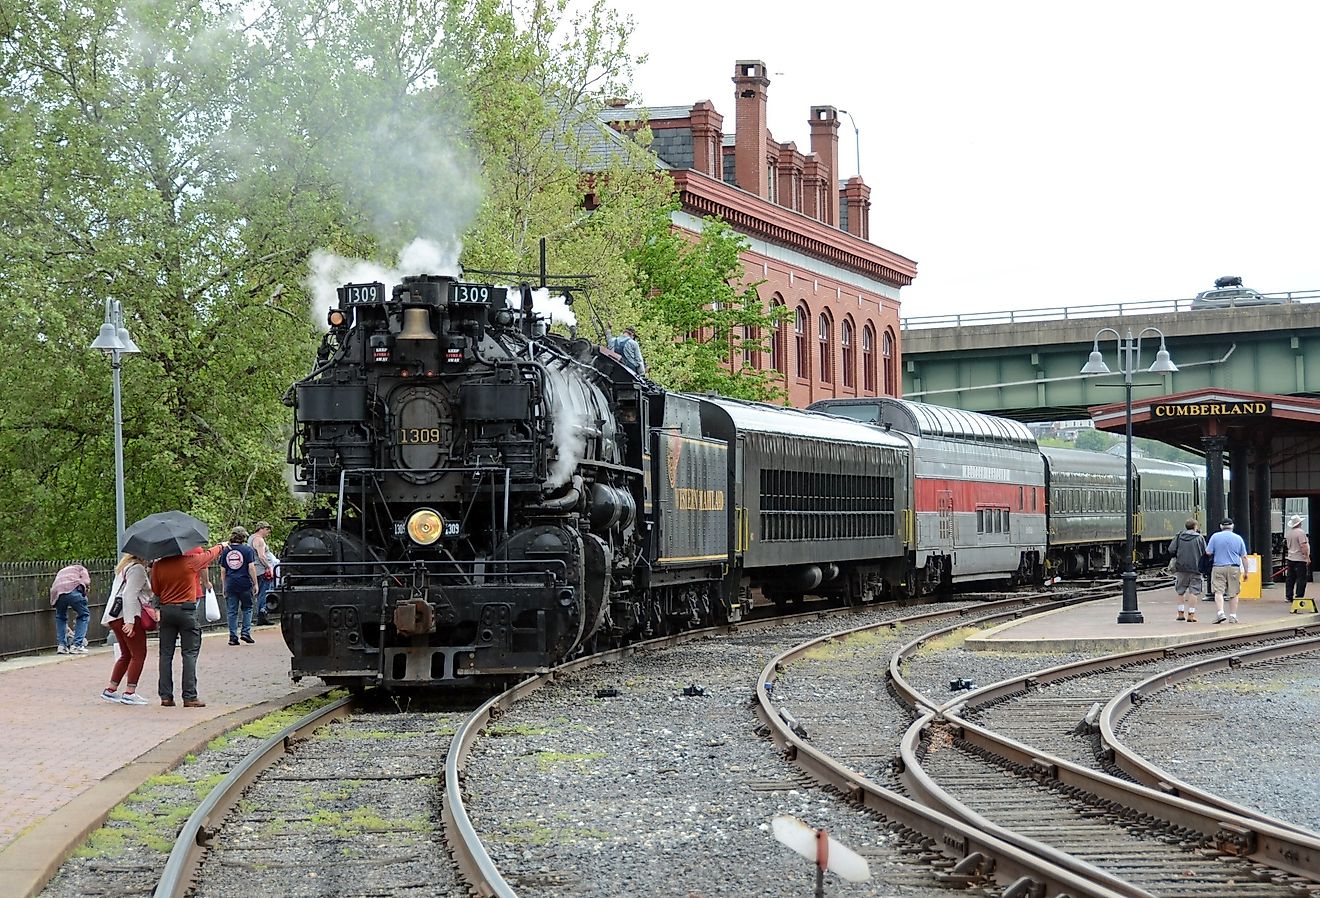 Baldwin Locomotive in Cumberland, Maryland. Image credit M Huston via Shutterstock